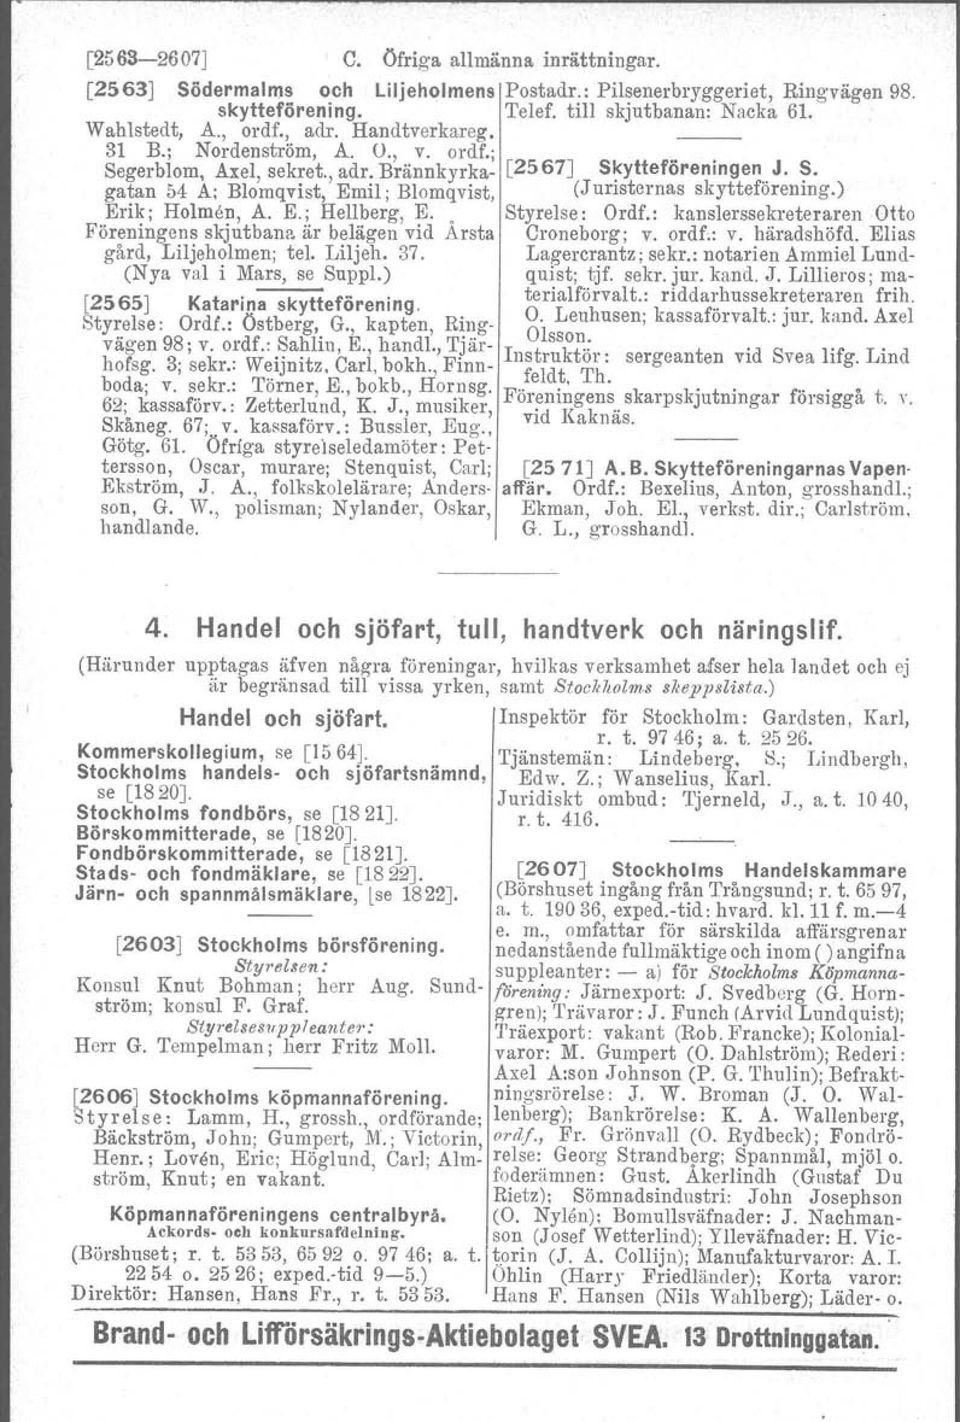 gatan 54 A; Blomqvist, Emil; Blomqvist, (Juristernas skytteforenmg.) Erik; Holmen, A. E.; Hellberg, E. Styrelse: Ordf.